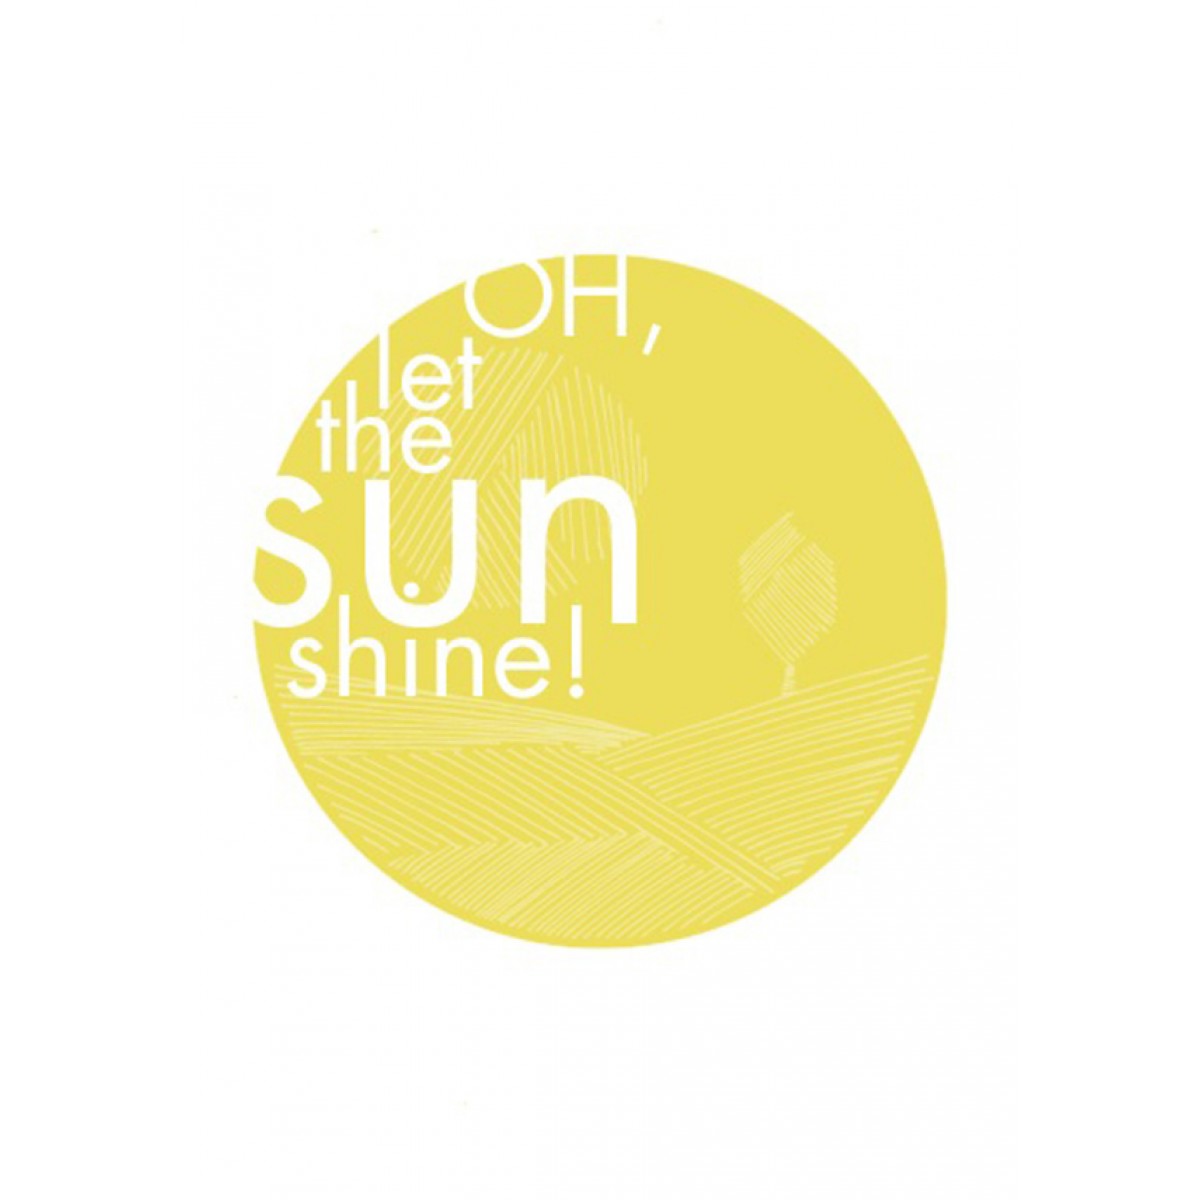 nahili ARTPRINT / POSTER "OH let the Sun Shine" (DIN A4/A3) gelbe gute Laune & Sonne